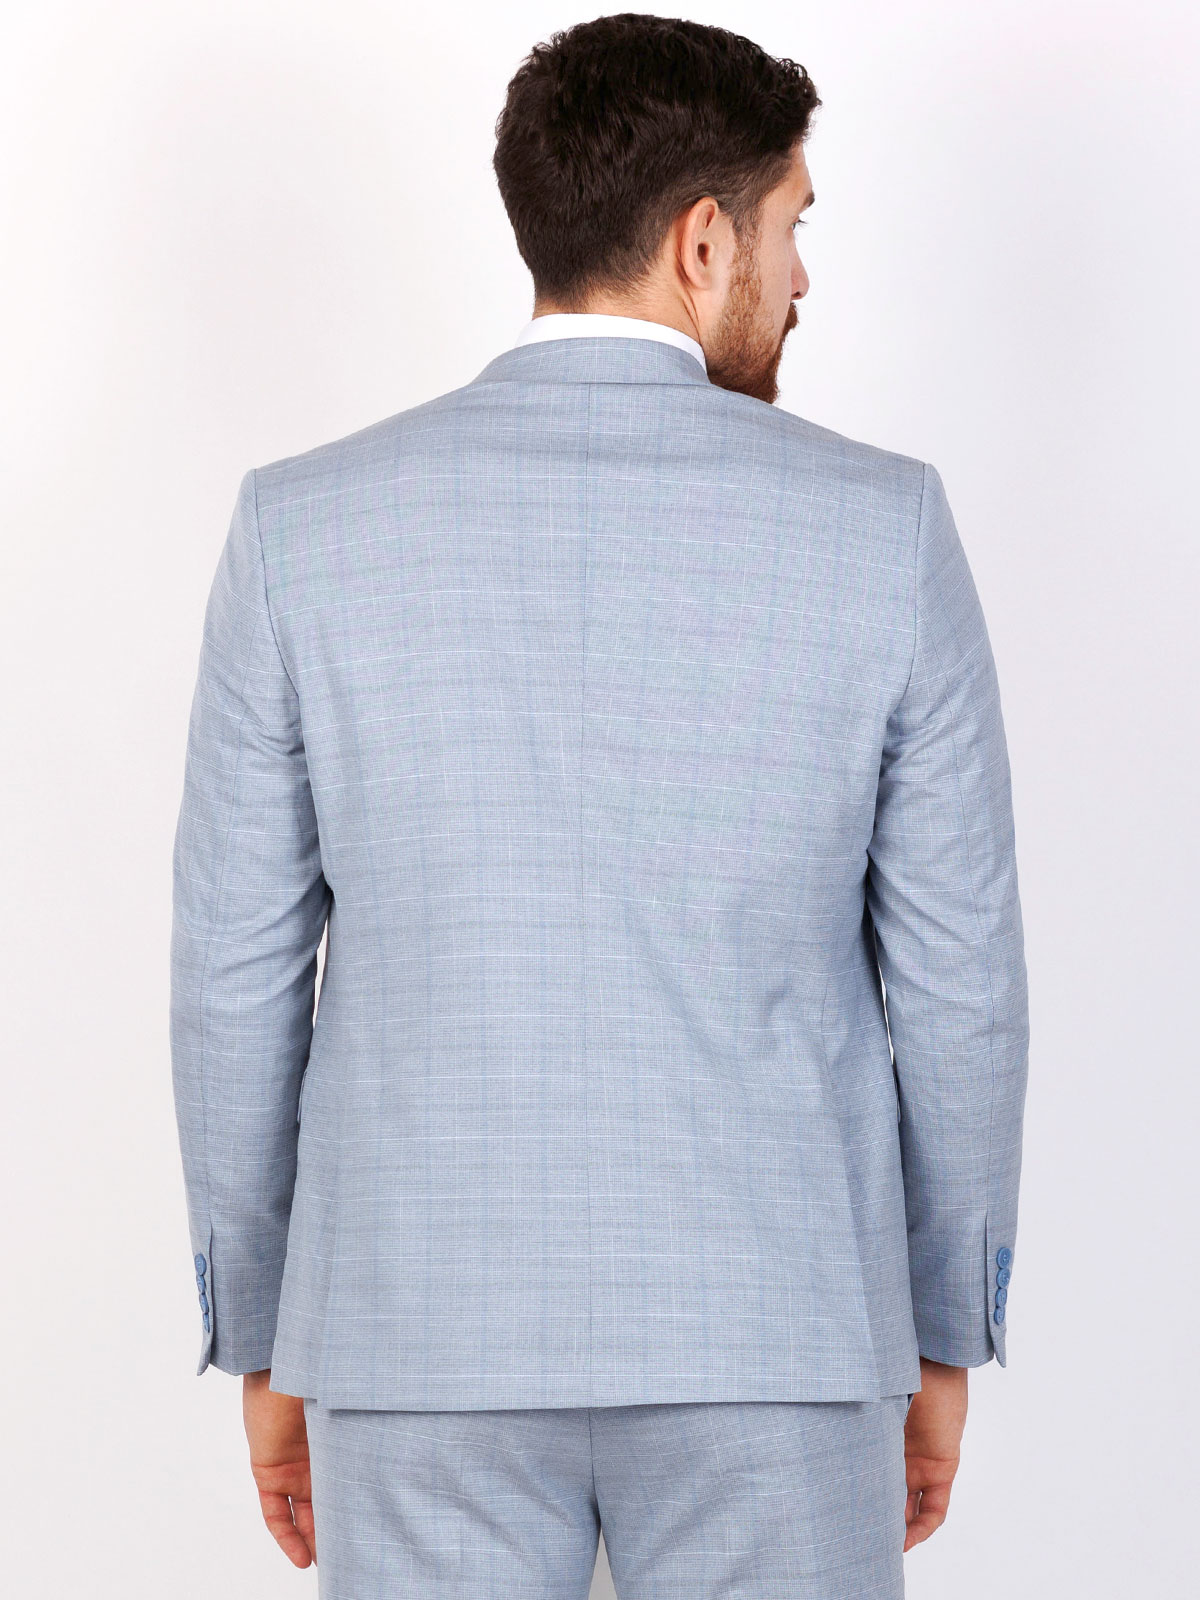 Elegant jacket in gray - 64125 € 141.73 img4